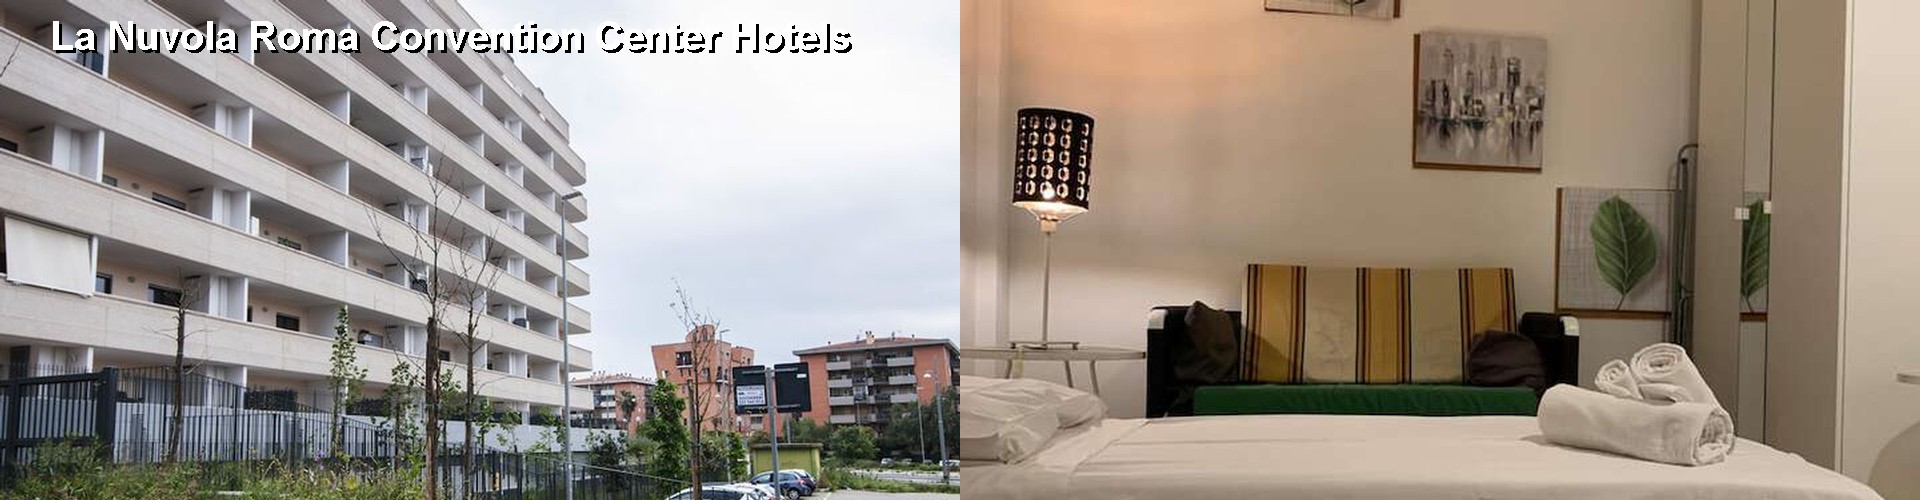 5 Best Hotels near La Nuvola Roma Convention Center